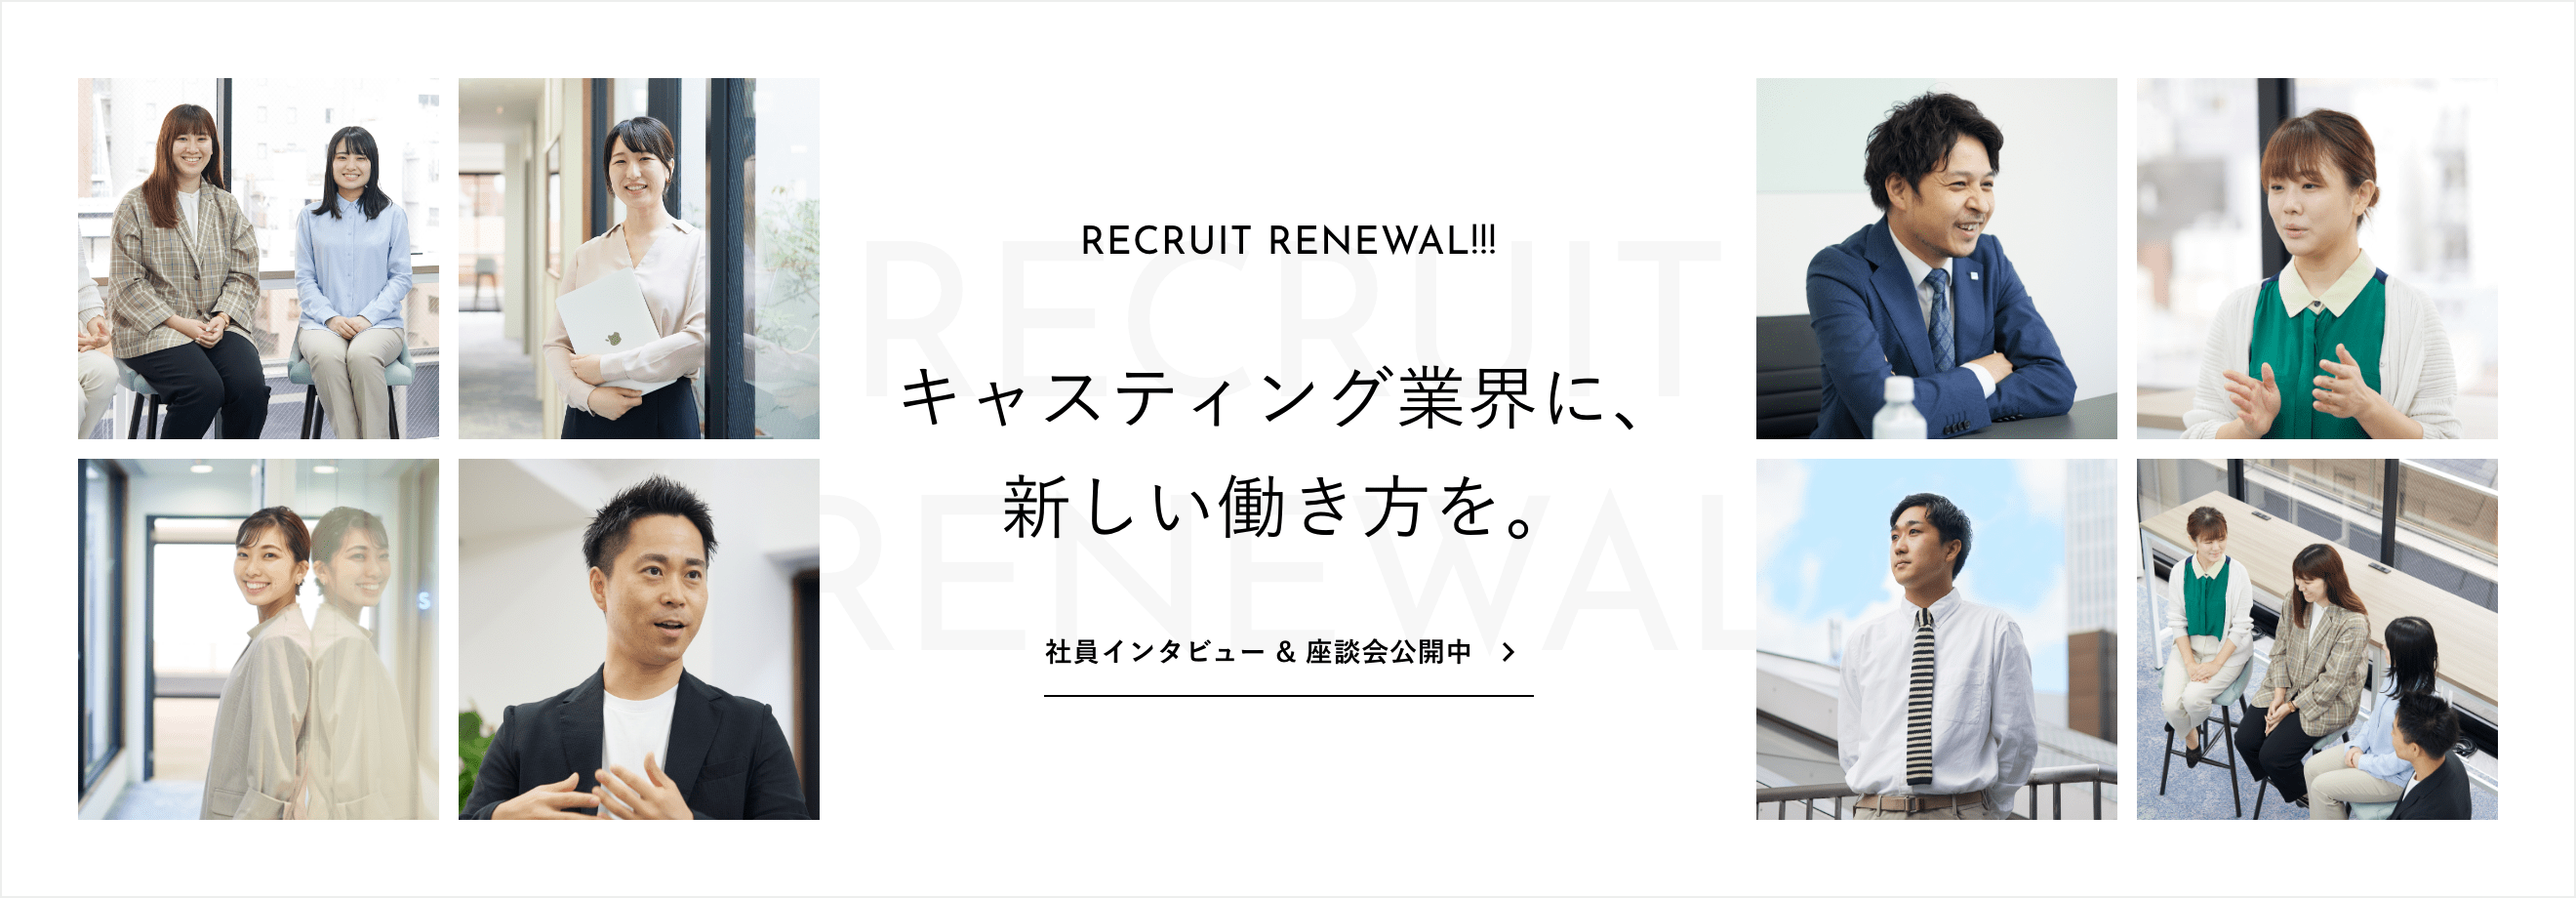 RECRUIT RENEWAL!!! キャスティング業界に、新しい働き方を。社員インタビュー & 座談会公開中